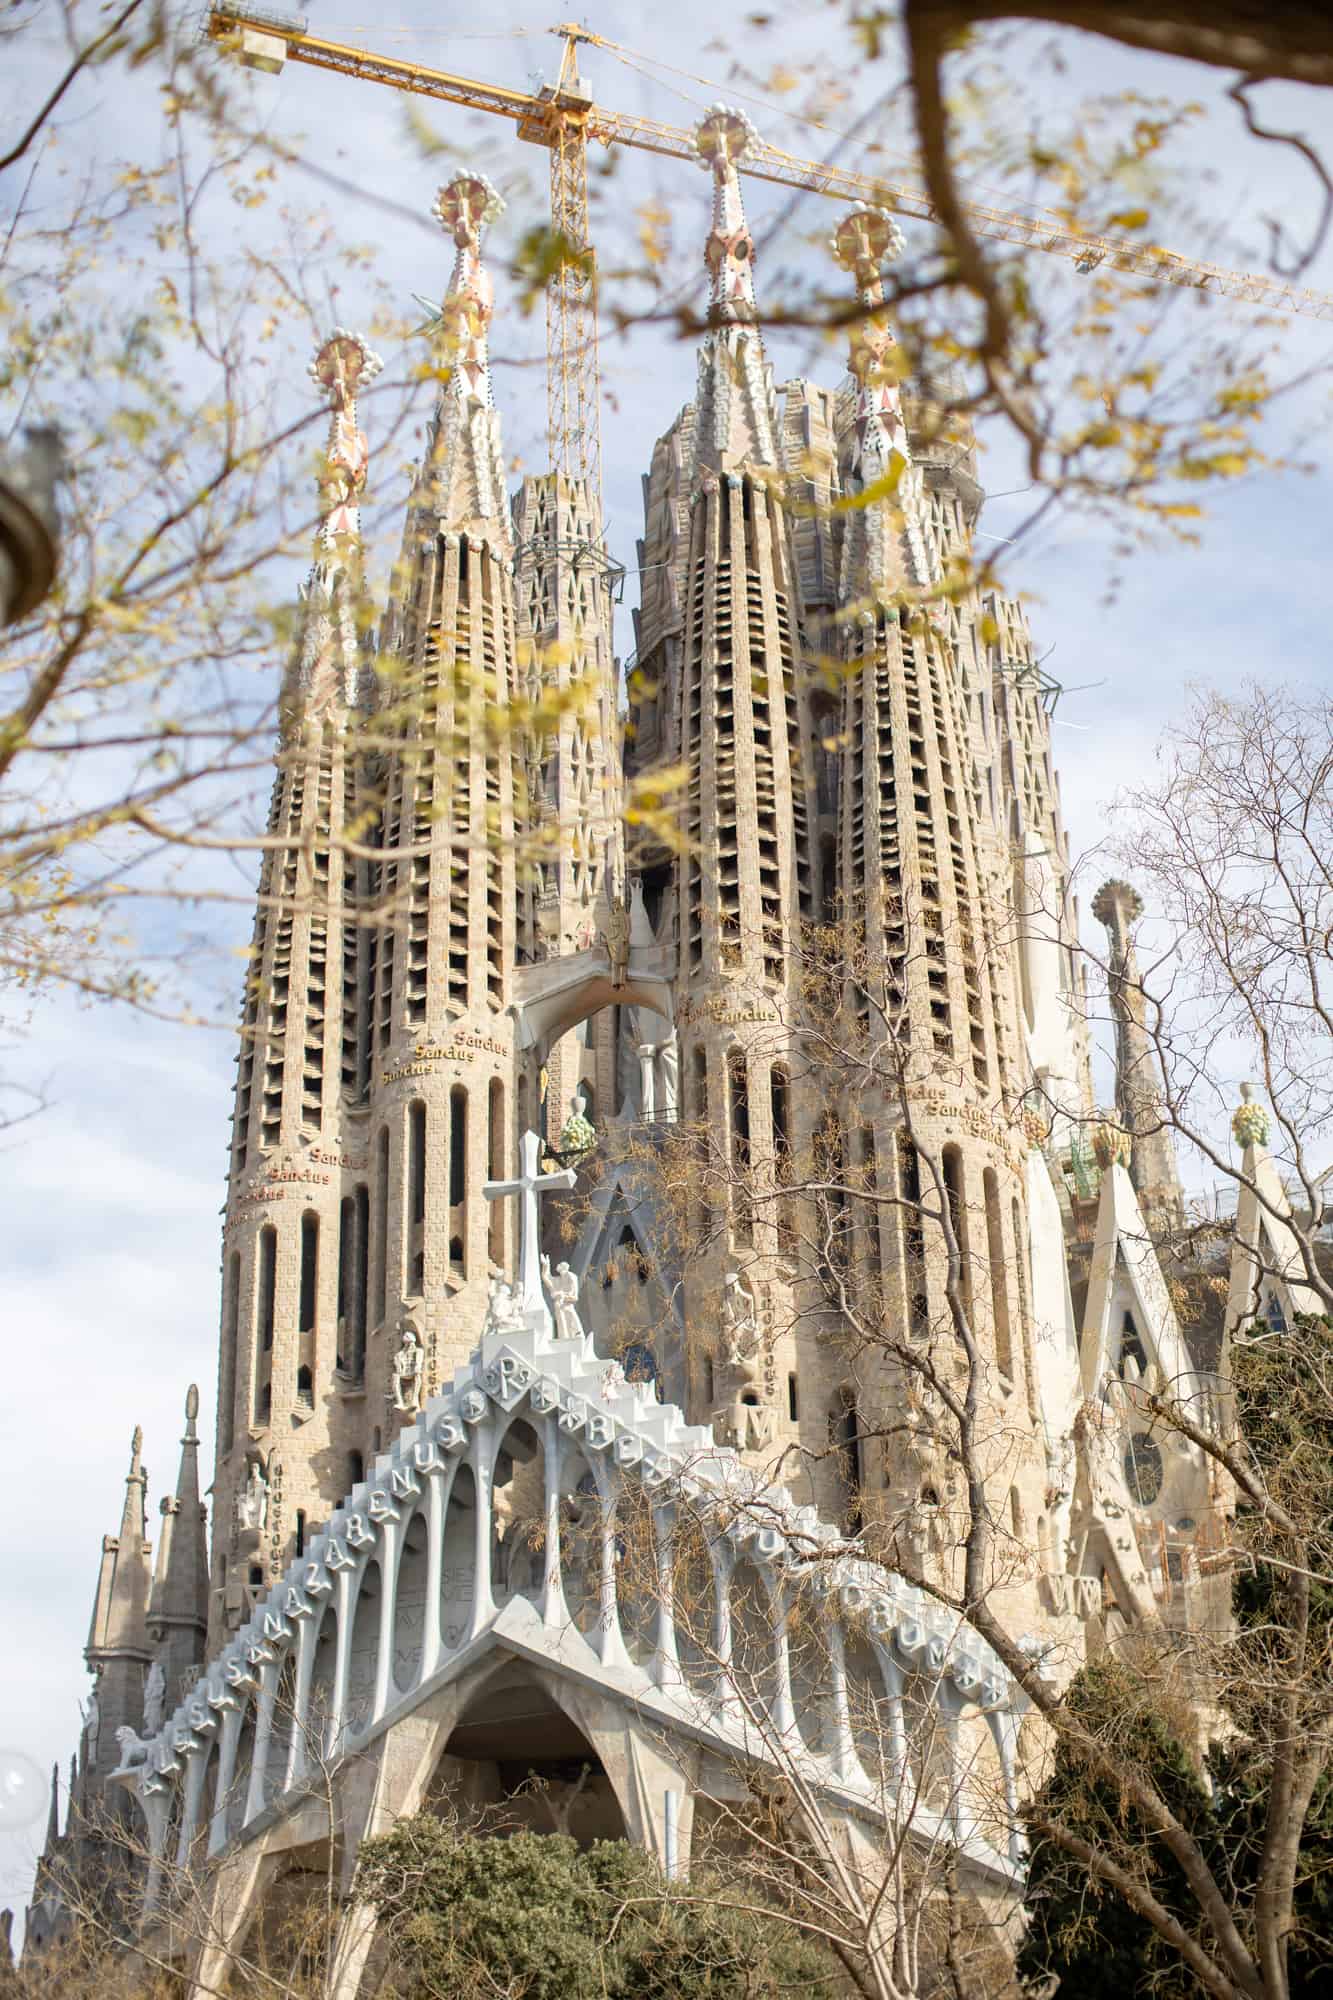 Famous Sagrada Familia basilica designed by catalan architect Antoni Gaudi in Barcelona, Spain